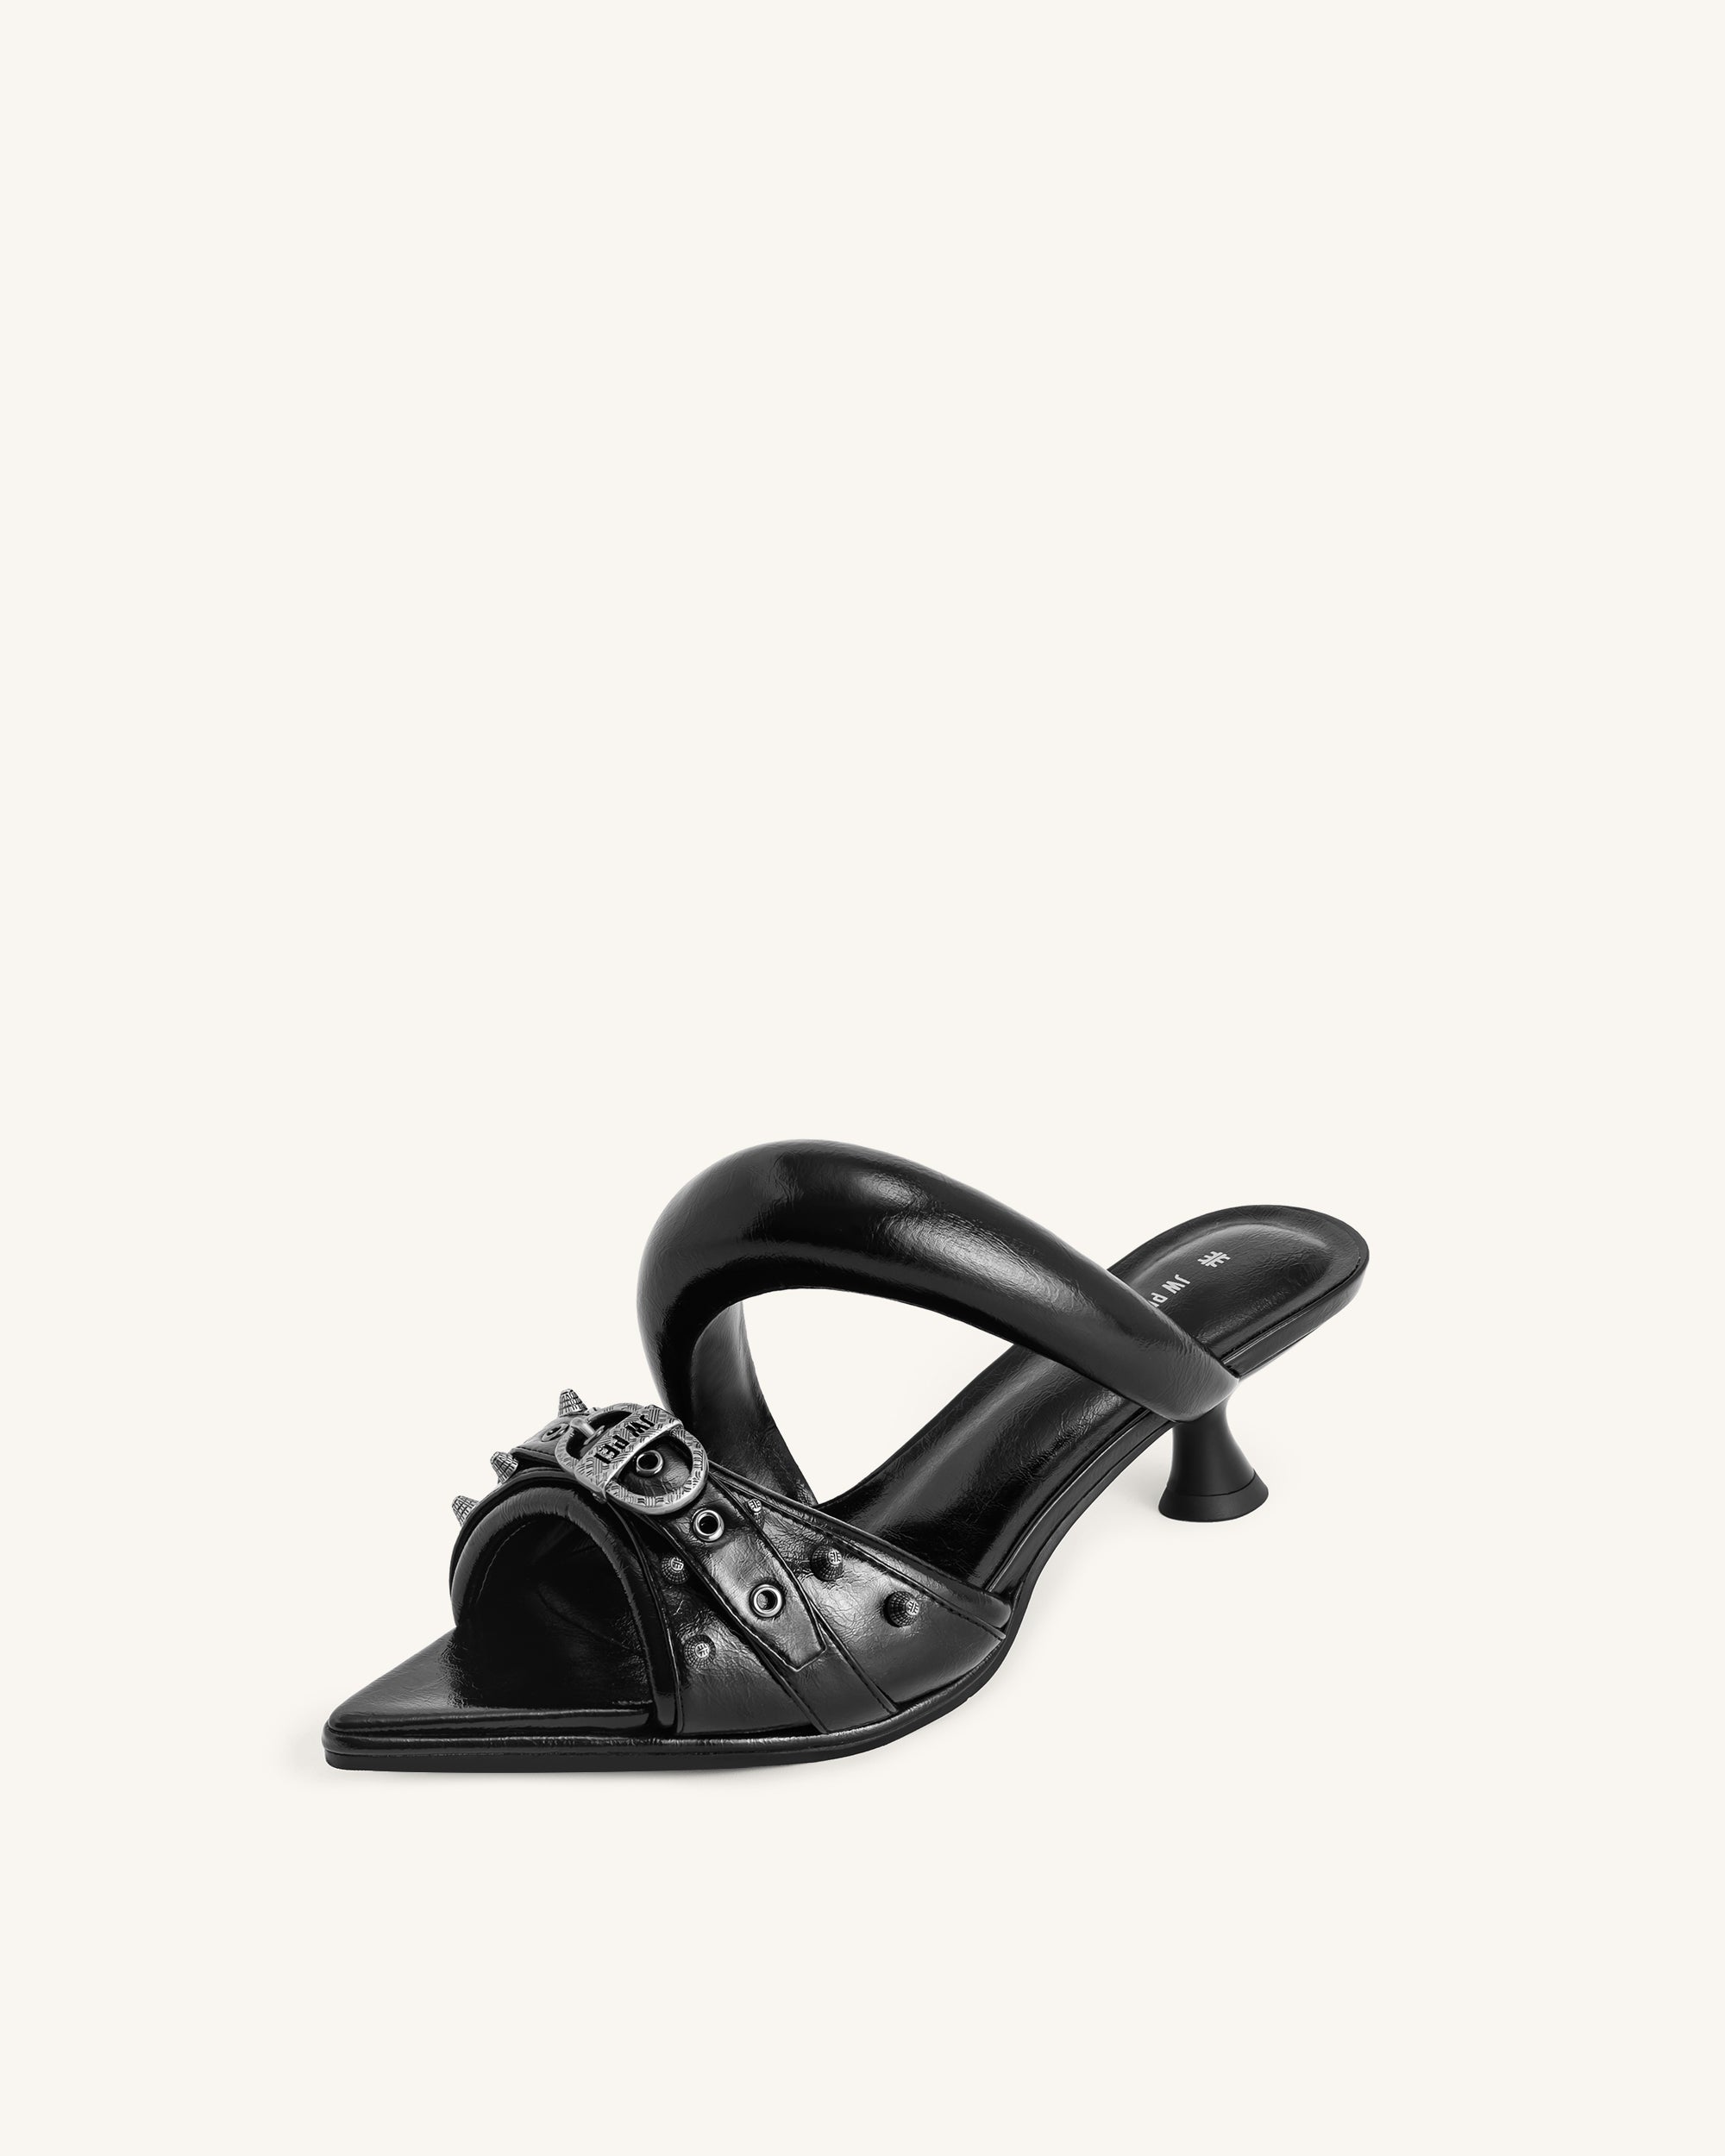 JW PEI Women's Sara Mule Heeled Sandals size 8 or 39 EU Lavender  $89.99 MSRP NEW